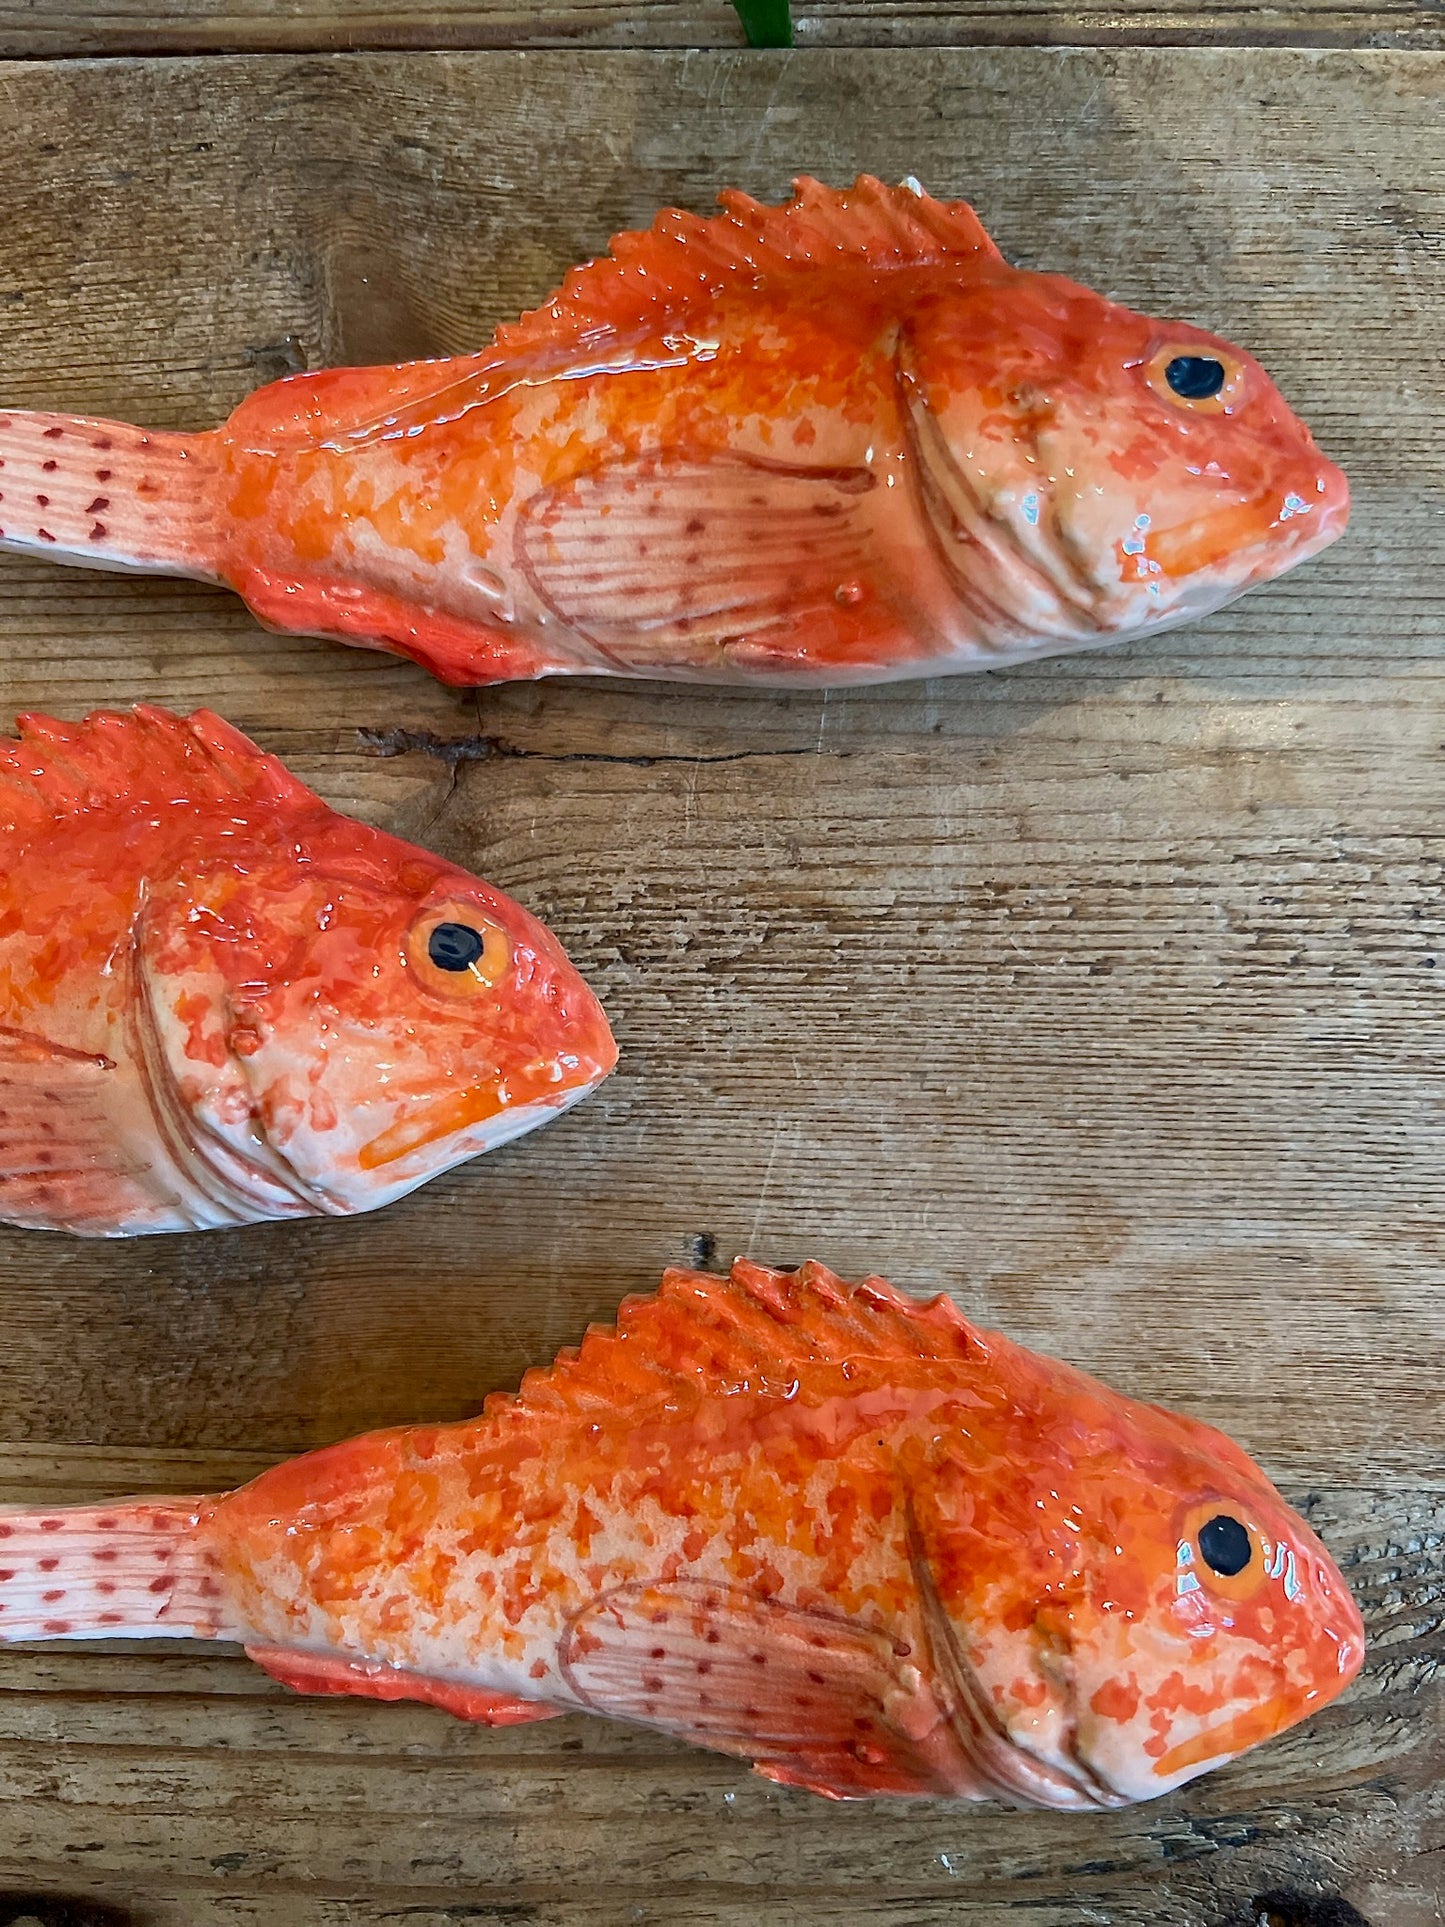 Scorfano - Small Red Rockfish